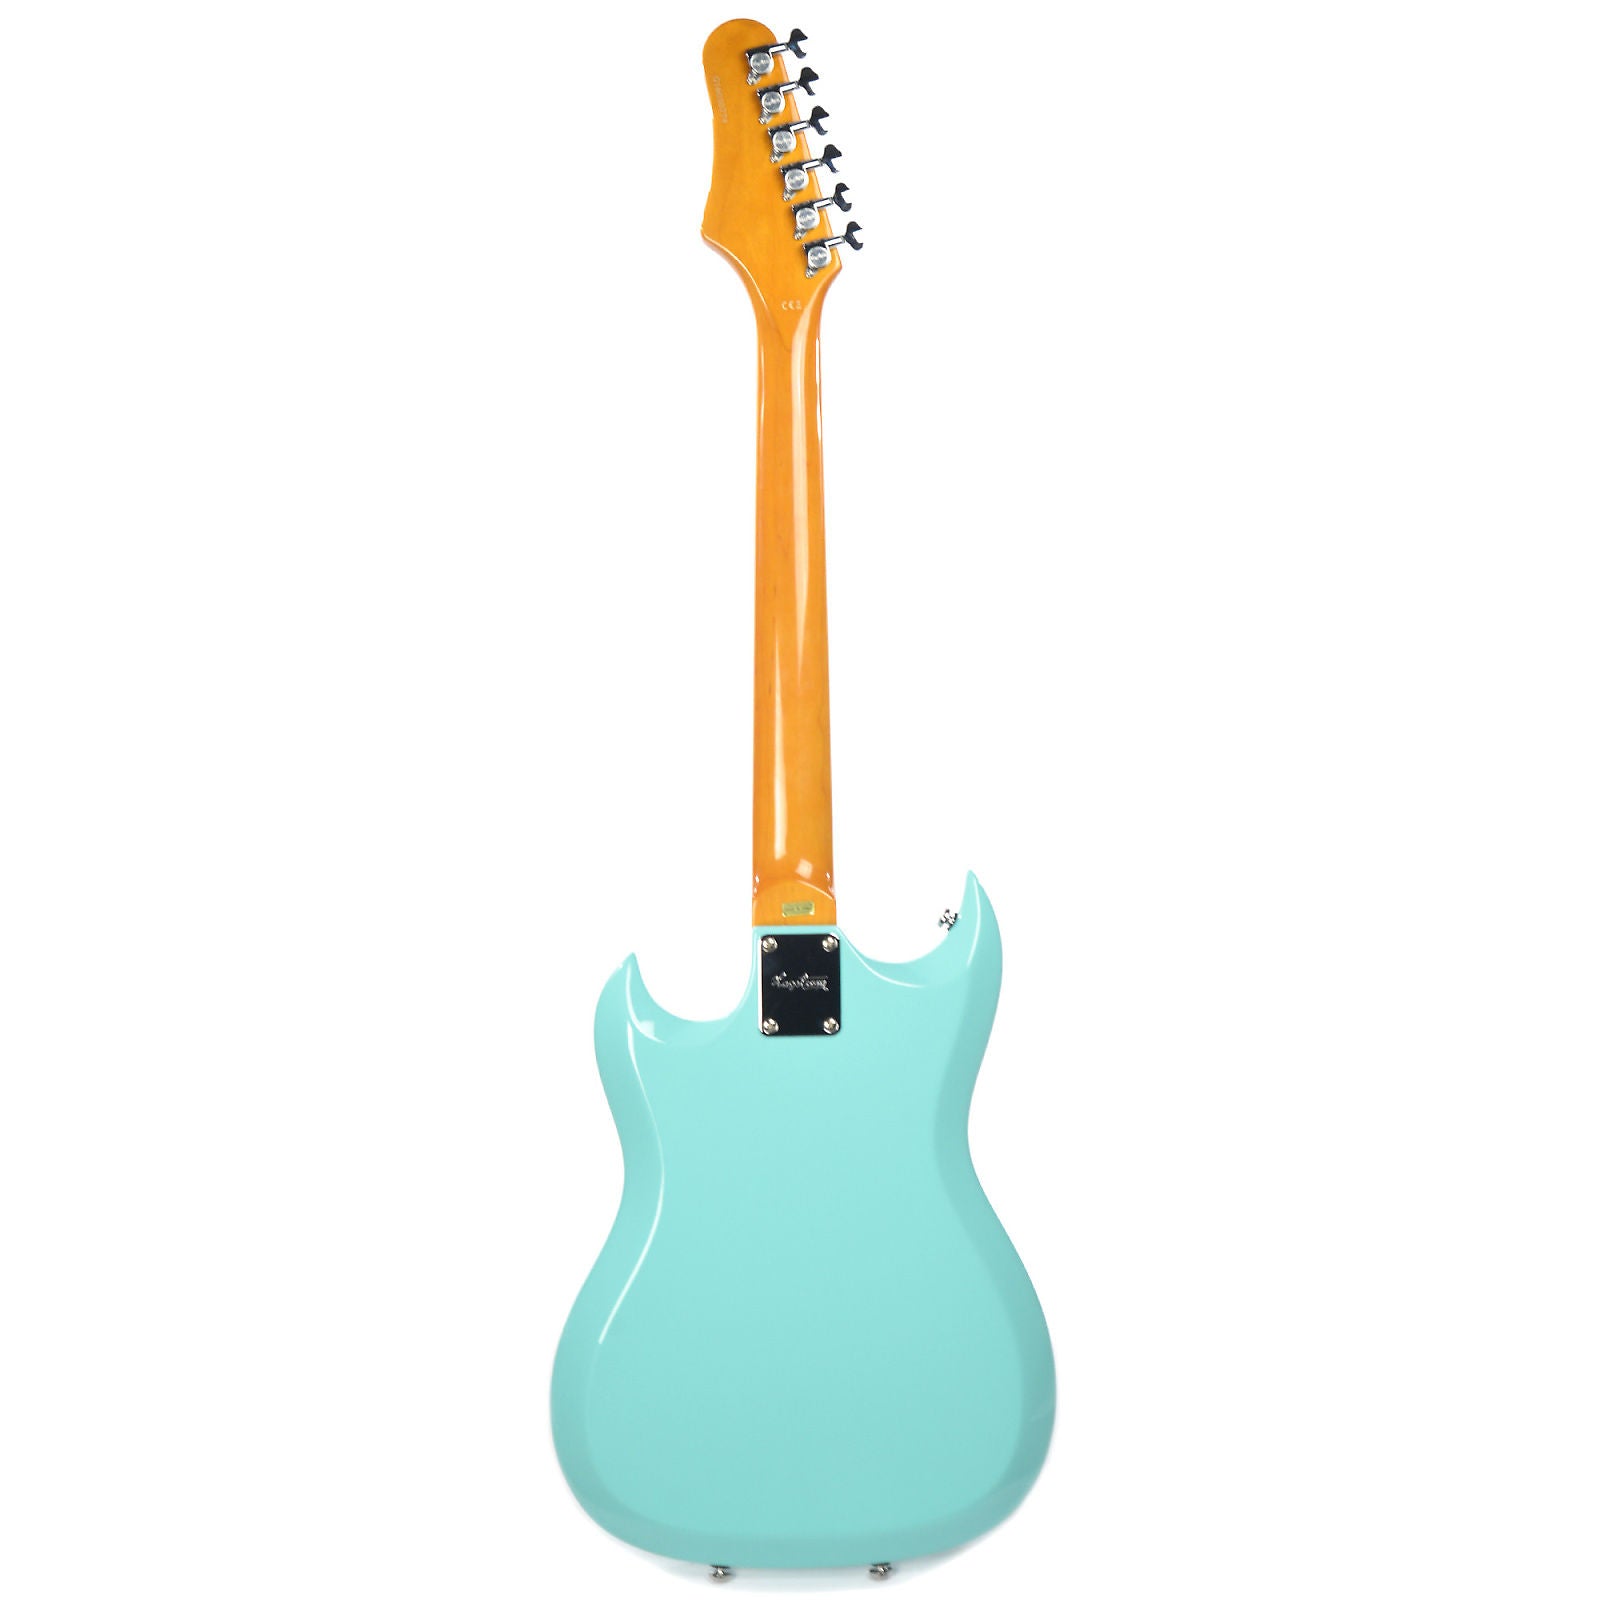 Hagstrom H-3 Retroscape Series 6 String Electric Guitar - Aged Sky Blue